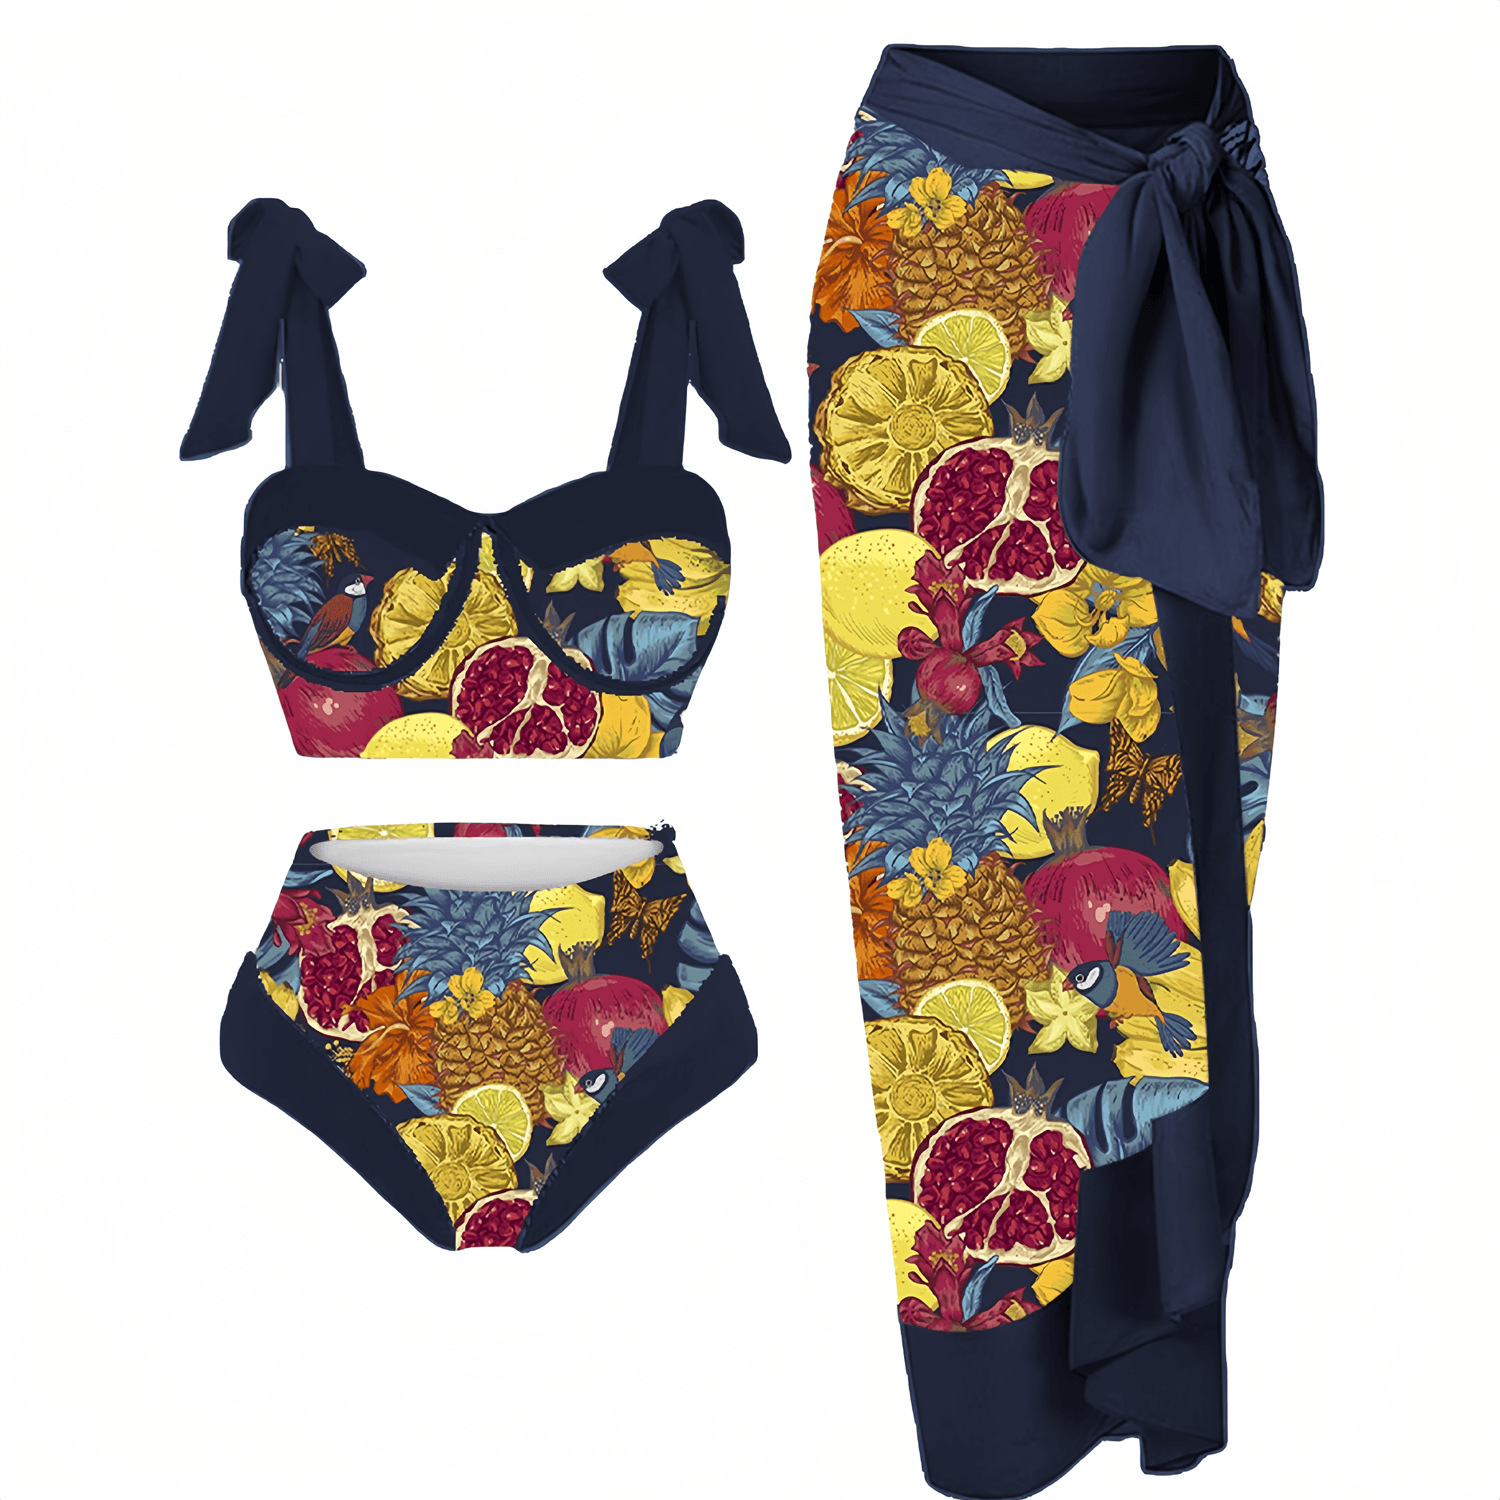 FK2055-2--Three-piece mesh long skirt swimsuit for women with digital print conservative swimwear bikini